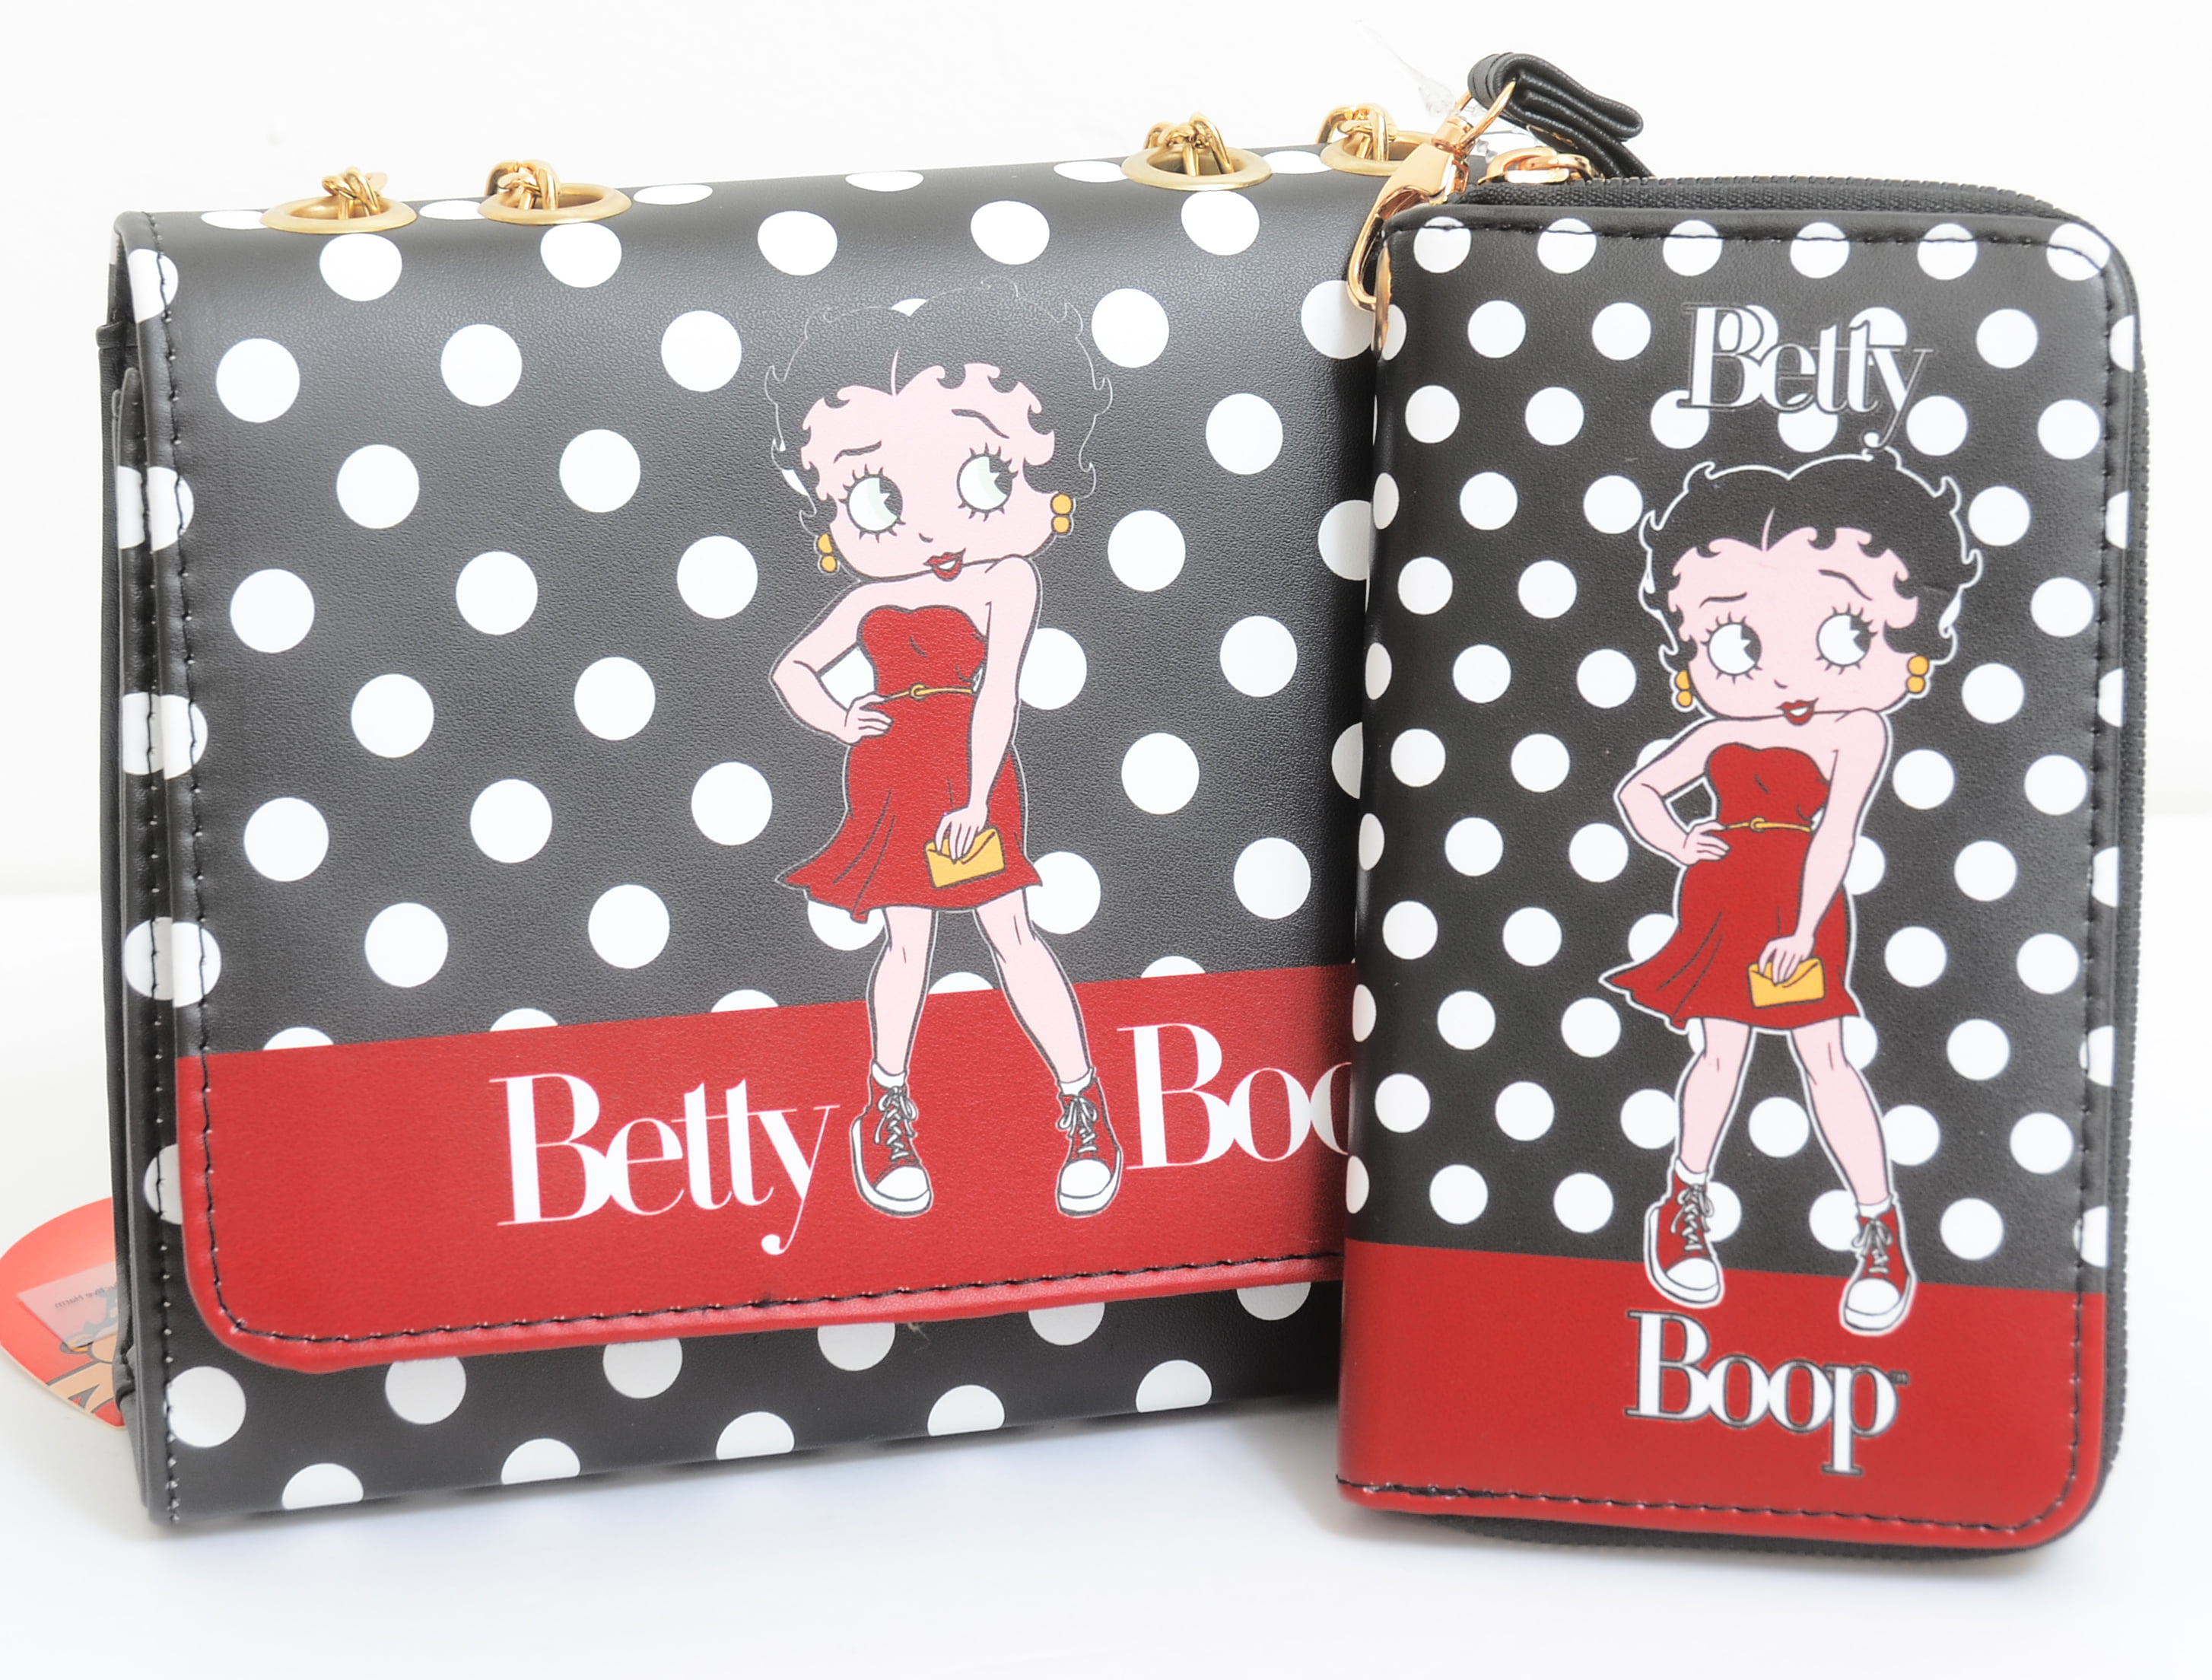 Lightweight Betty Boop Shopping Bag Anime Shoulder Bag Cute Tote Bag Handbag For Women Girls 